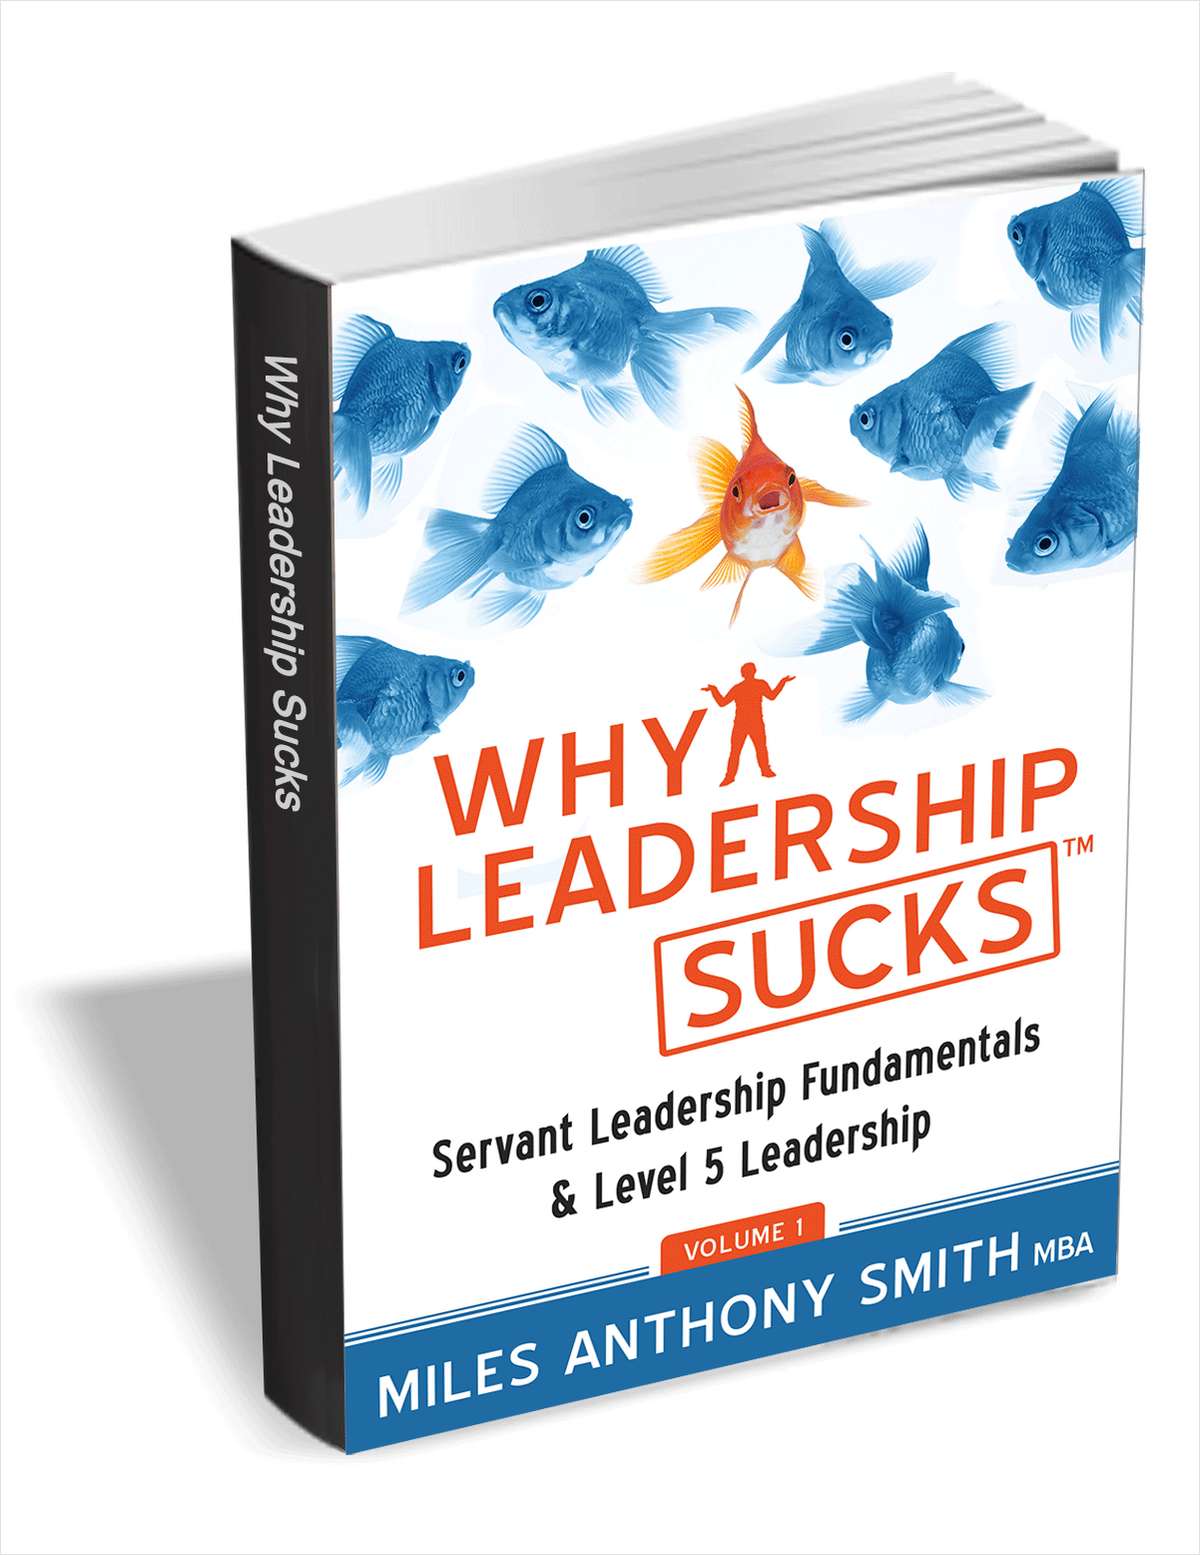 Why Leadership Sucks: The Fundamentals of Level 5 Leadership and Servant Leadership (Free eBook) A $14.95 Value